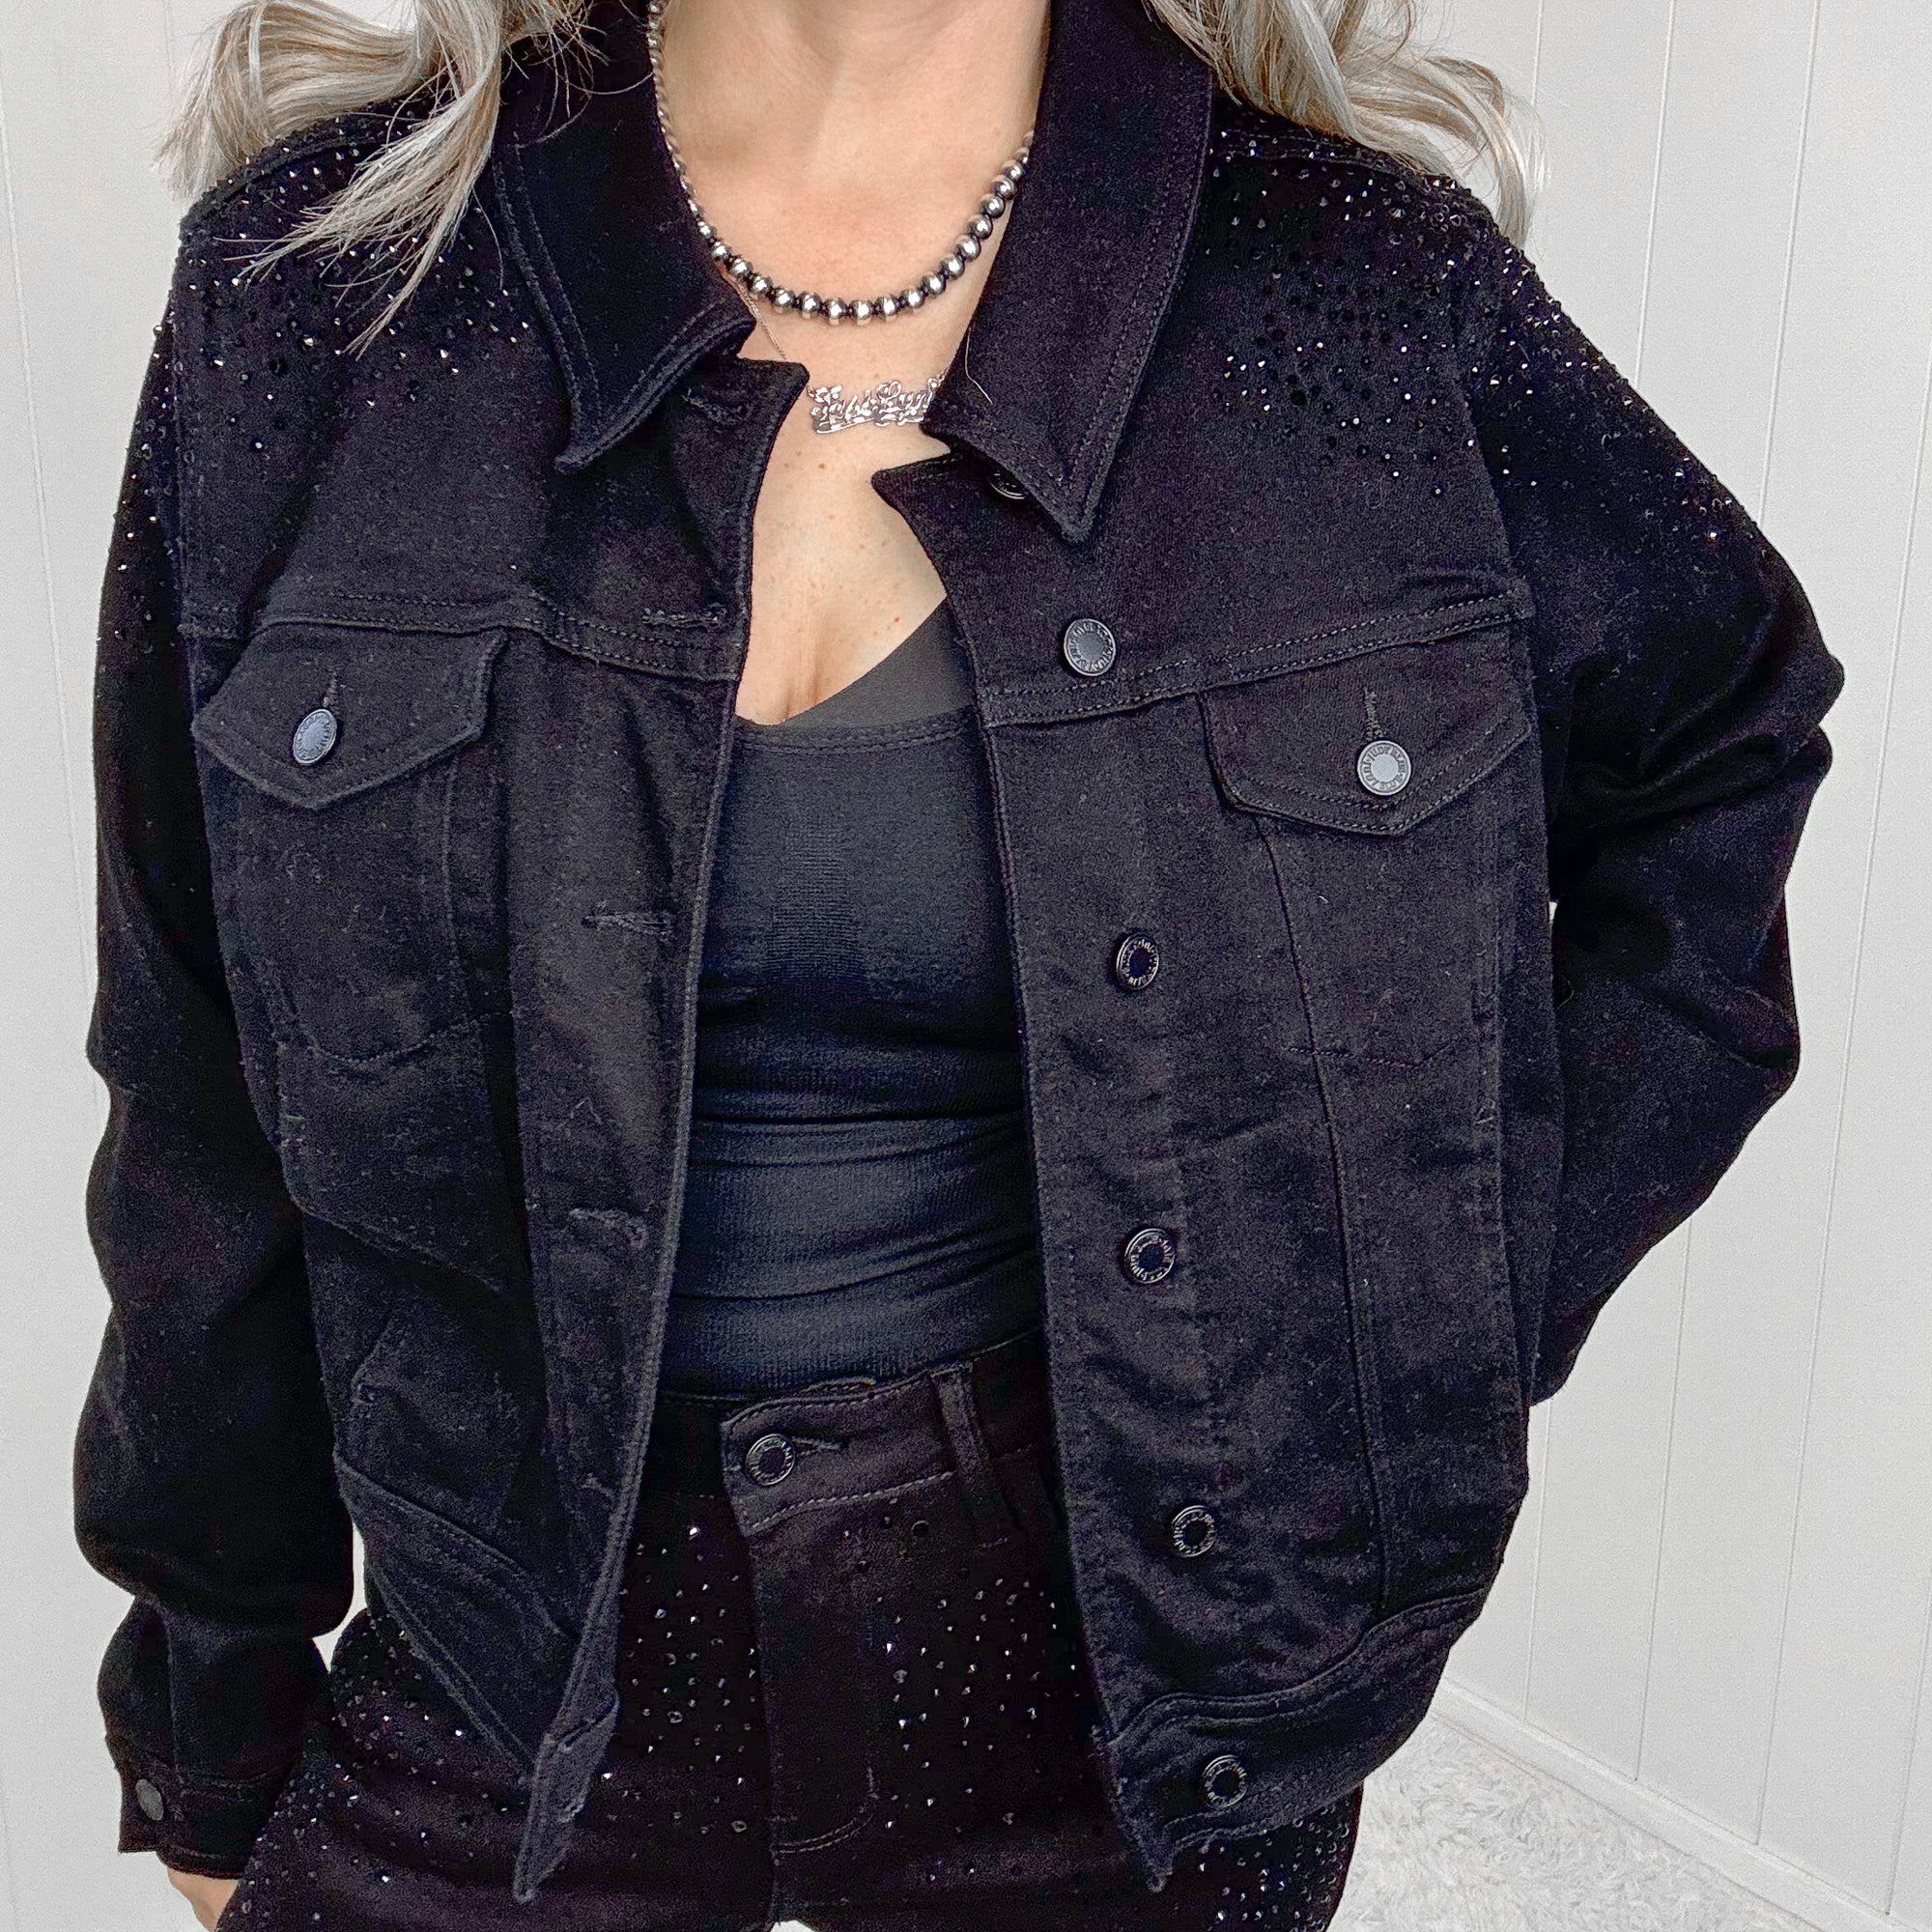 Judy Blue Reese Rhinestone Denim Jacket in Black - Boujee Boutique 